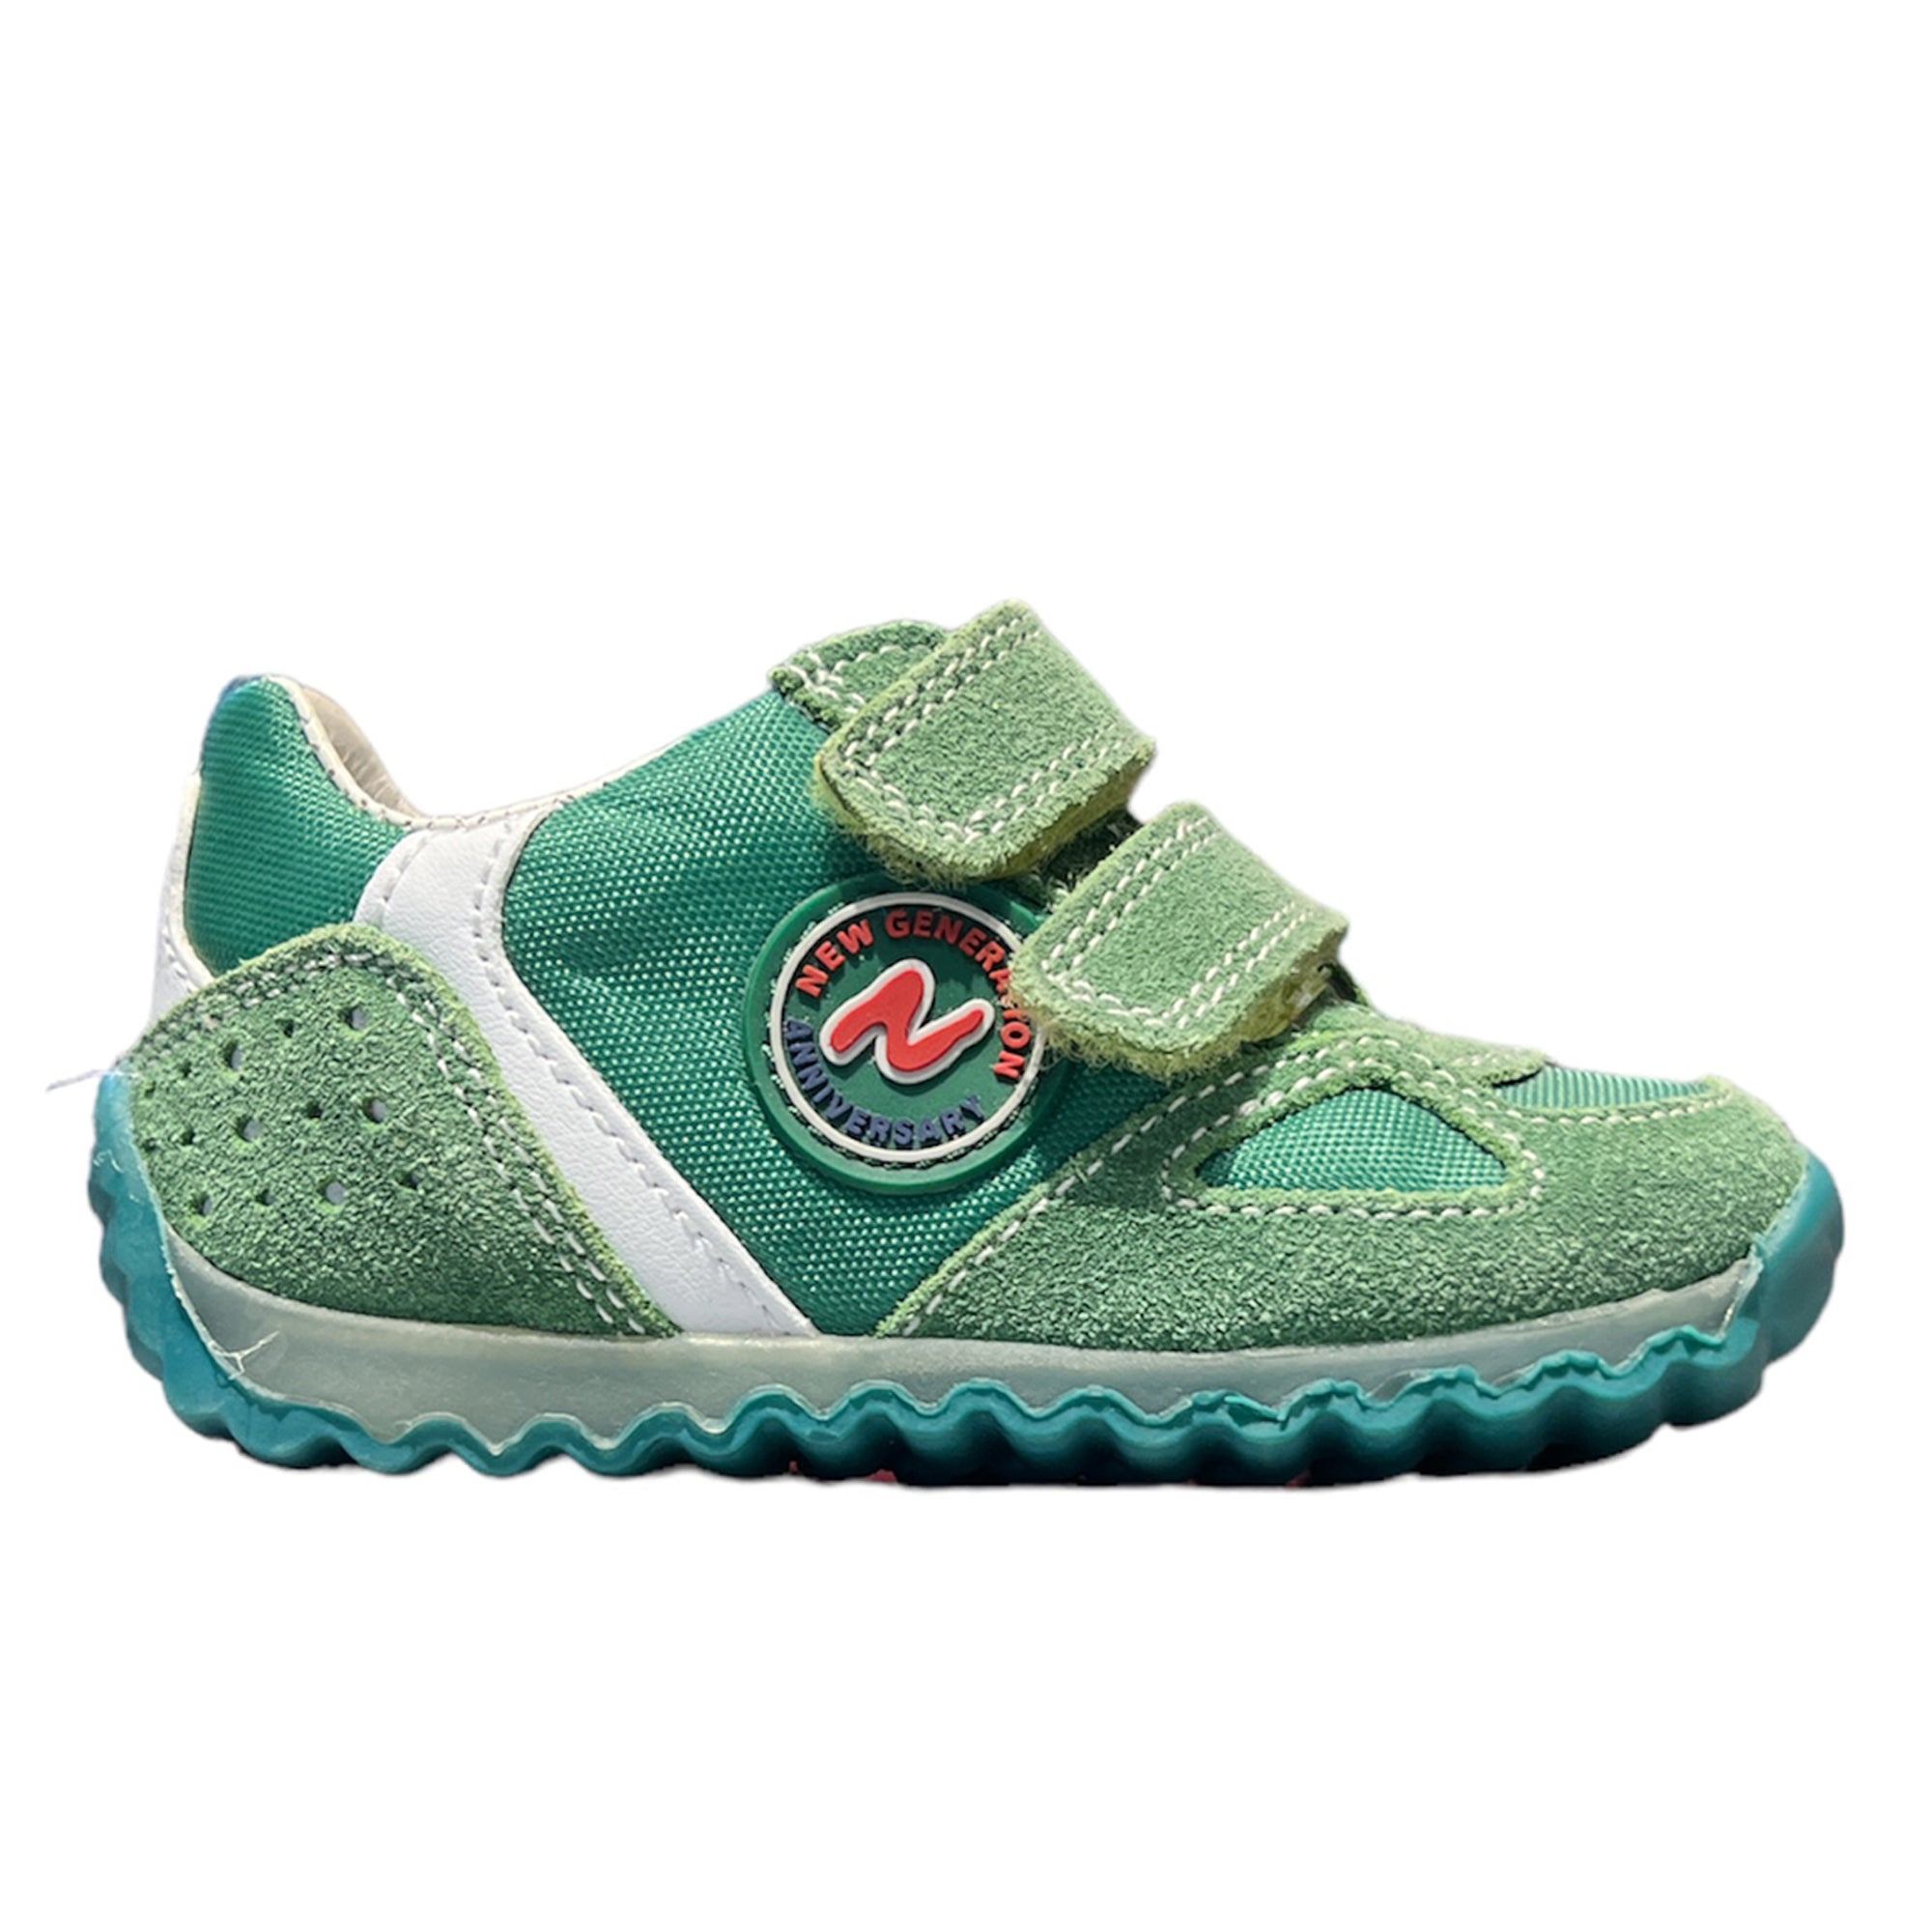 Naturino Baby Boys Green Sneakers